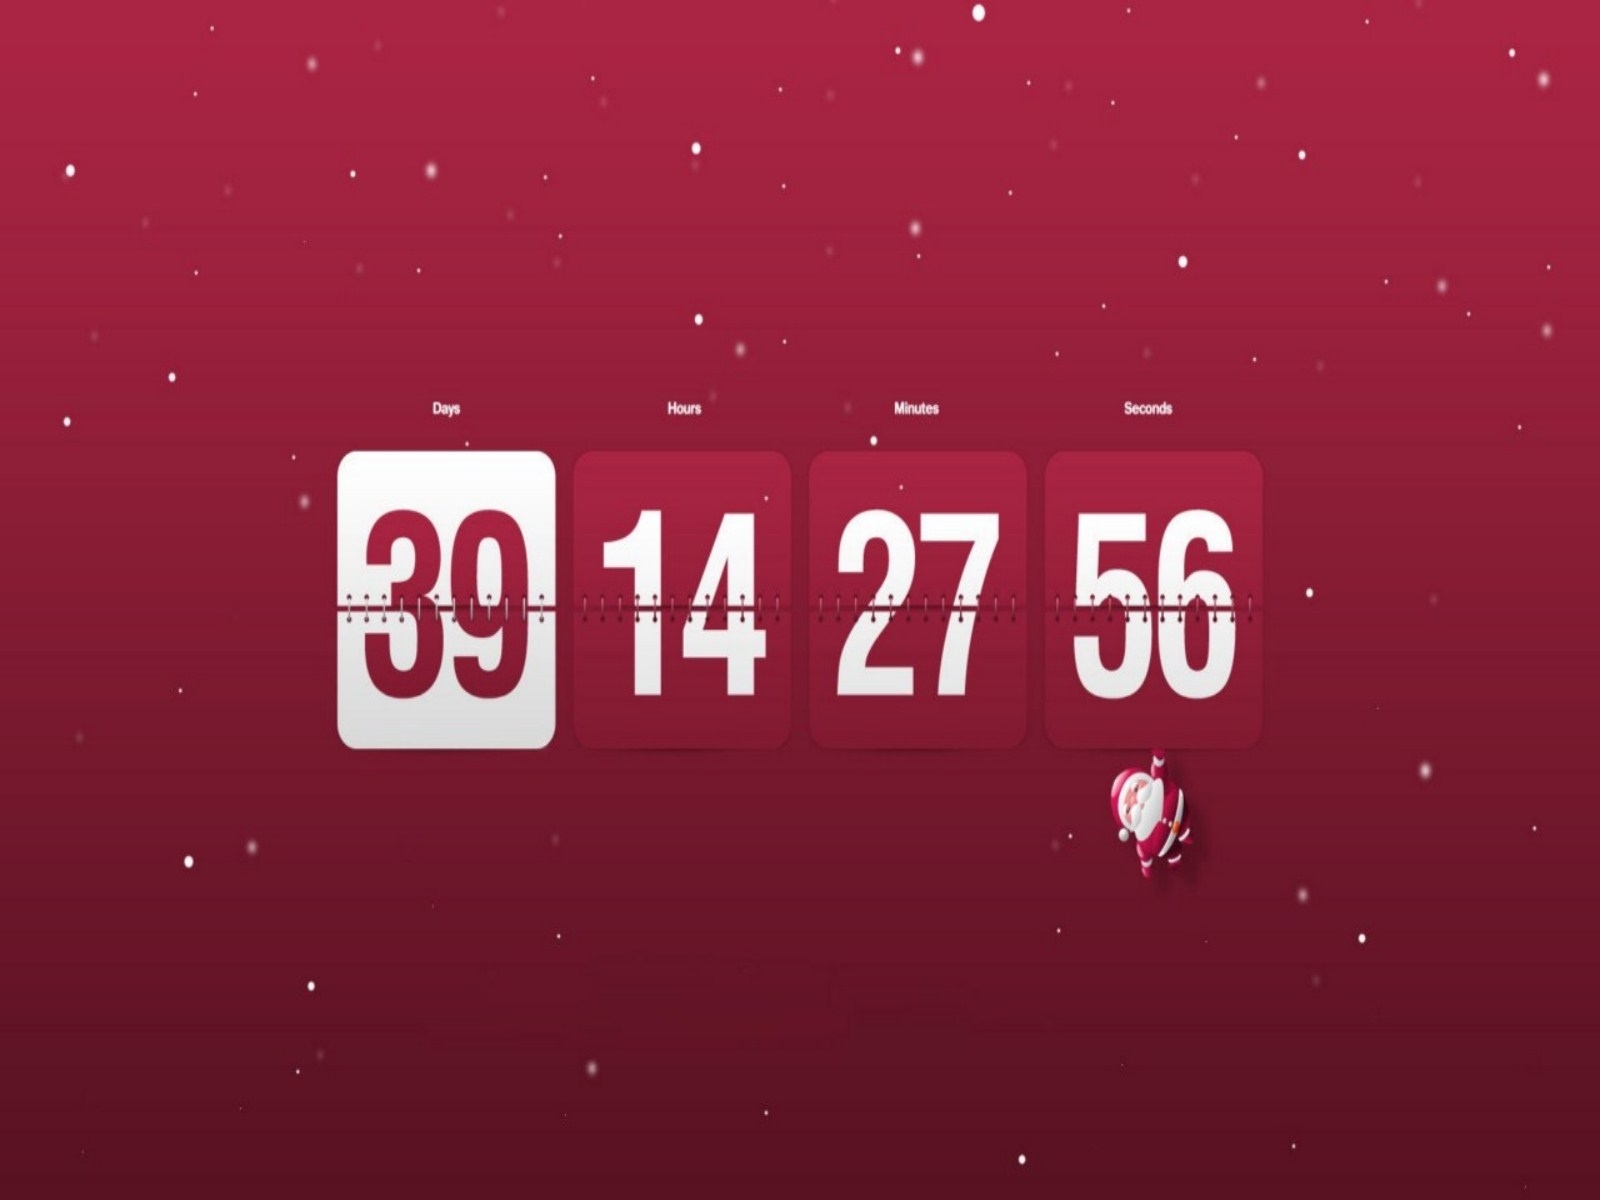 49+] Desktop Wallpaper Countdown Timer On Wallpapersafari Countdown Calendar For Your Desktop